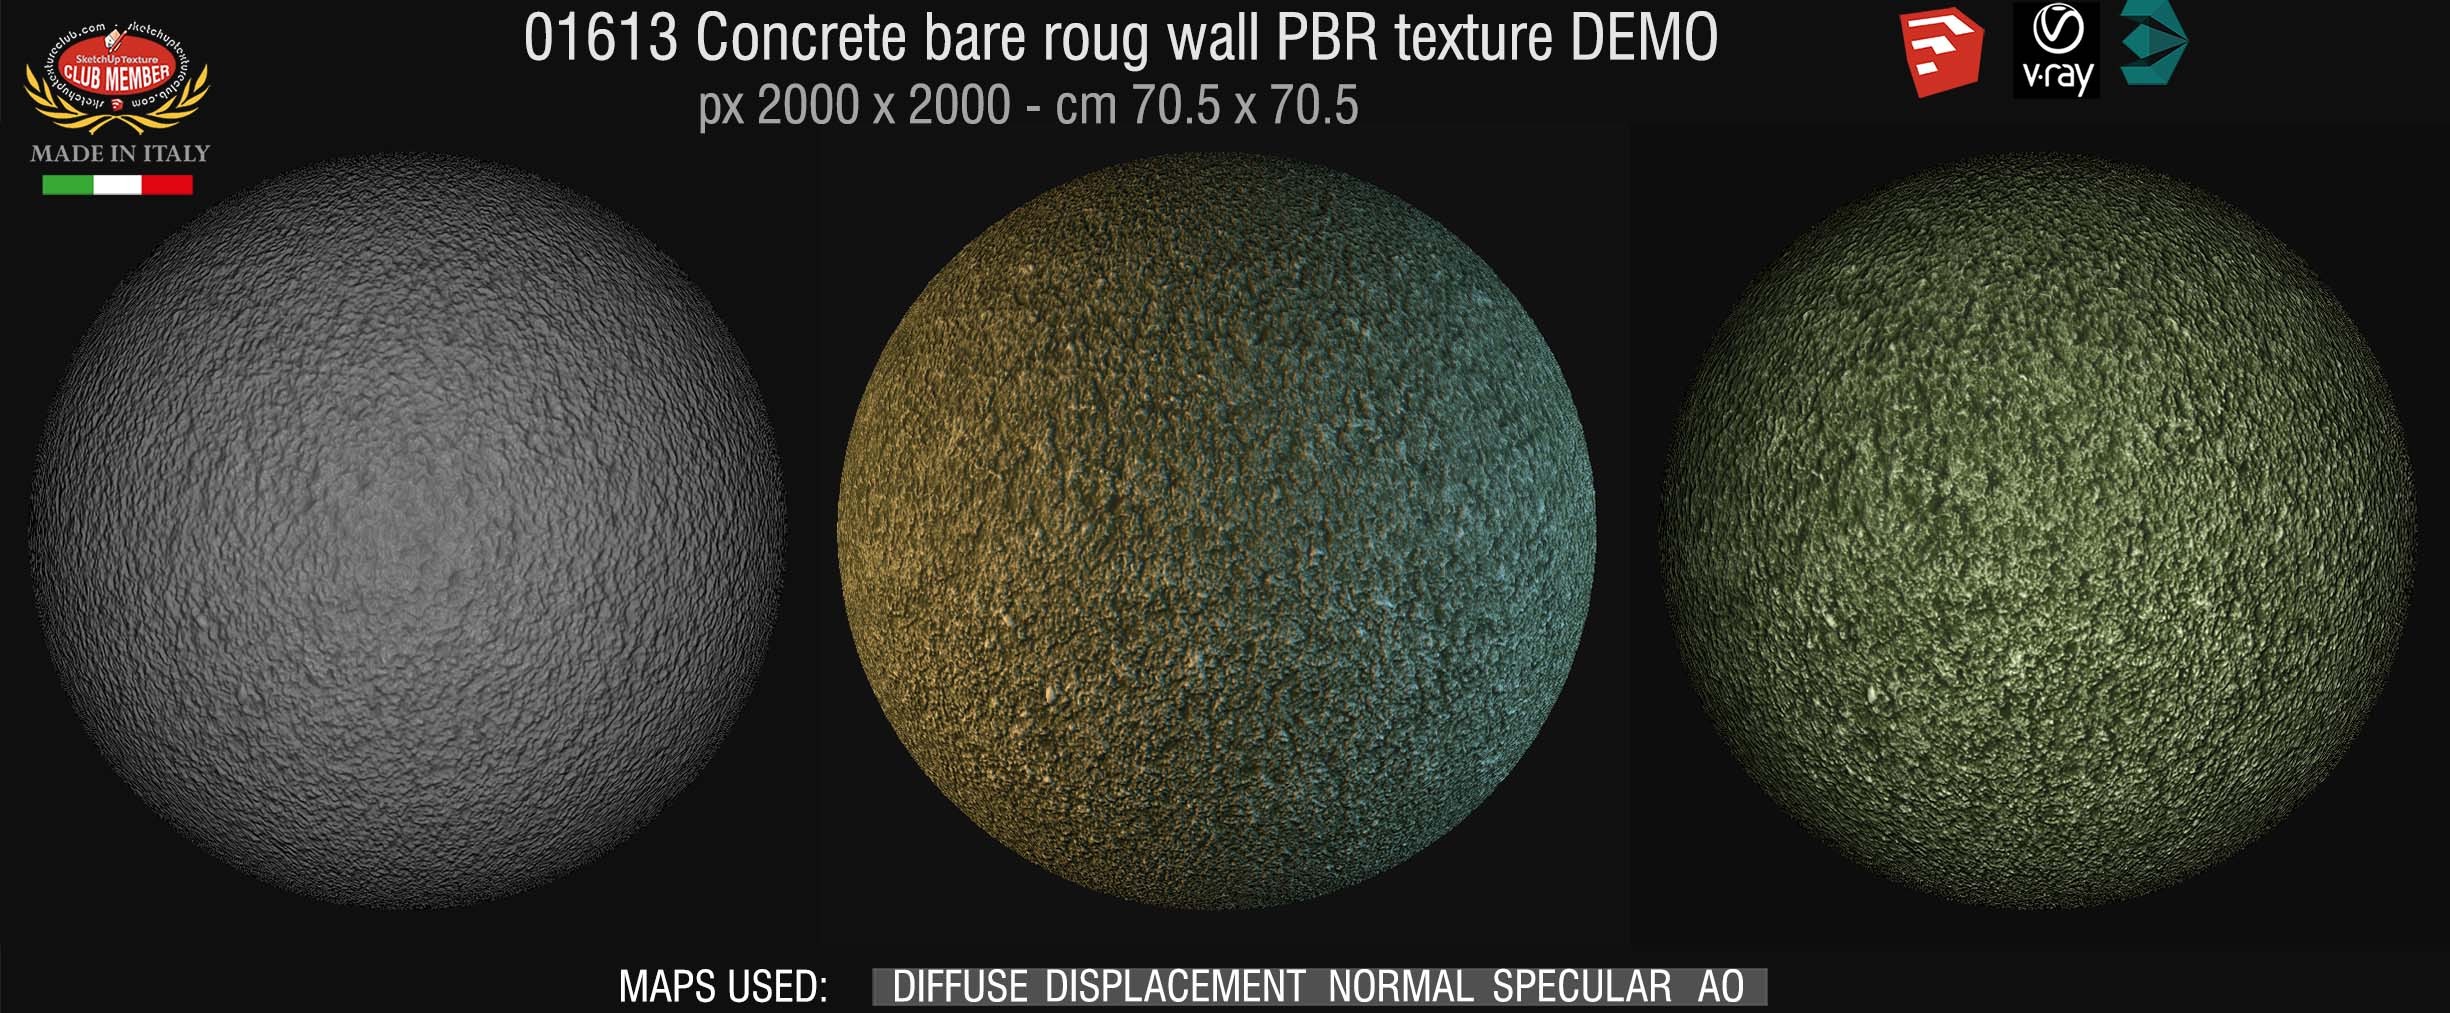 01613 concrete bare rough wall PBR texture seamless DEMO